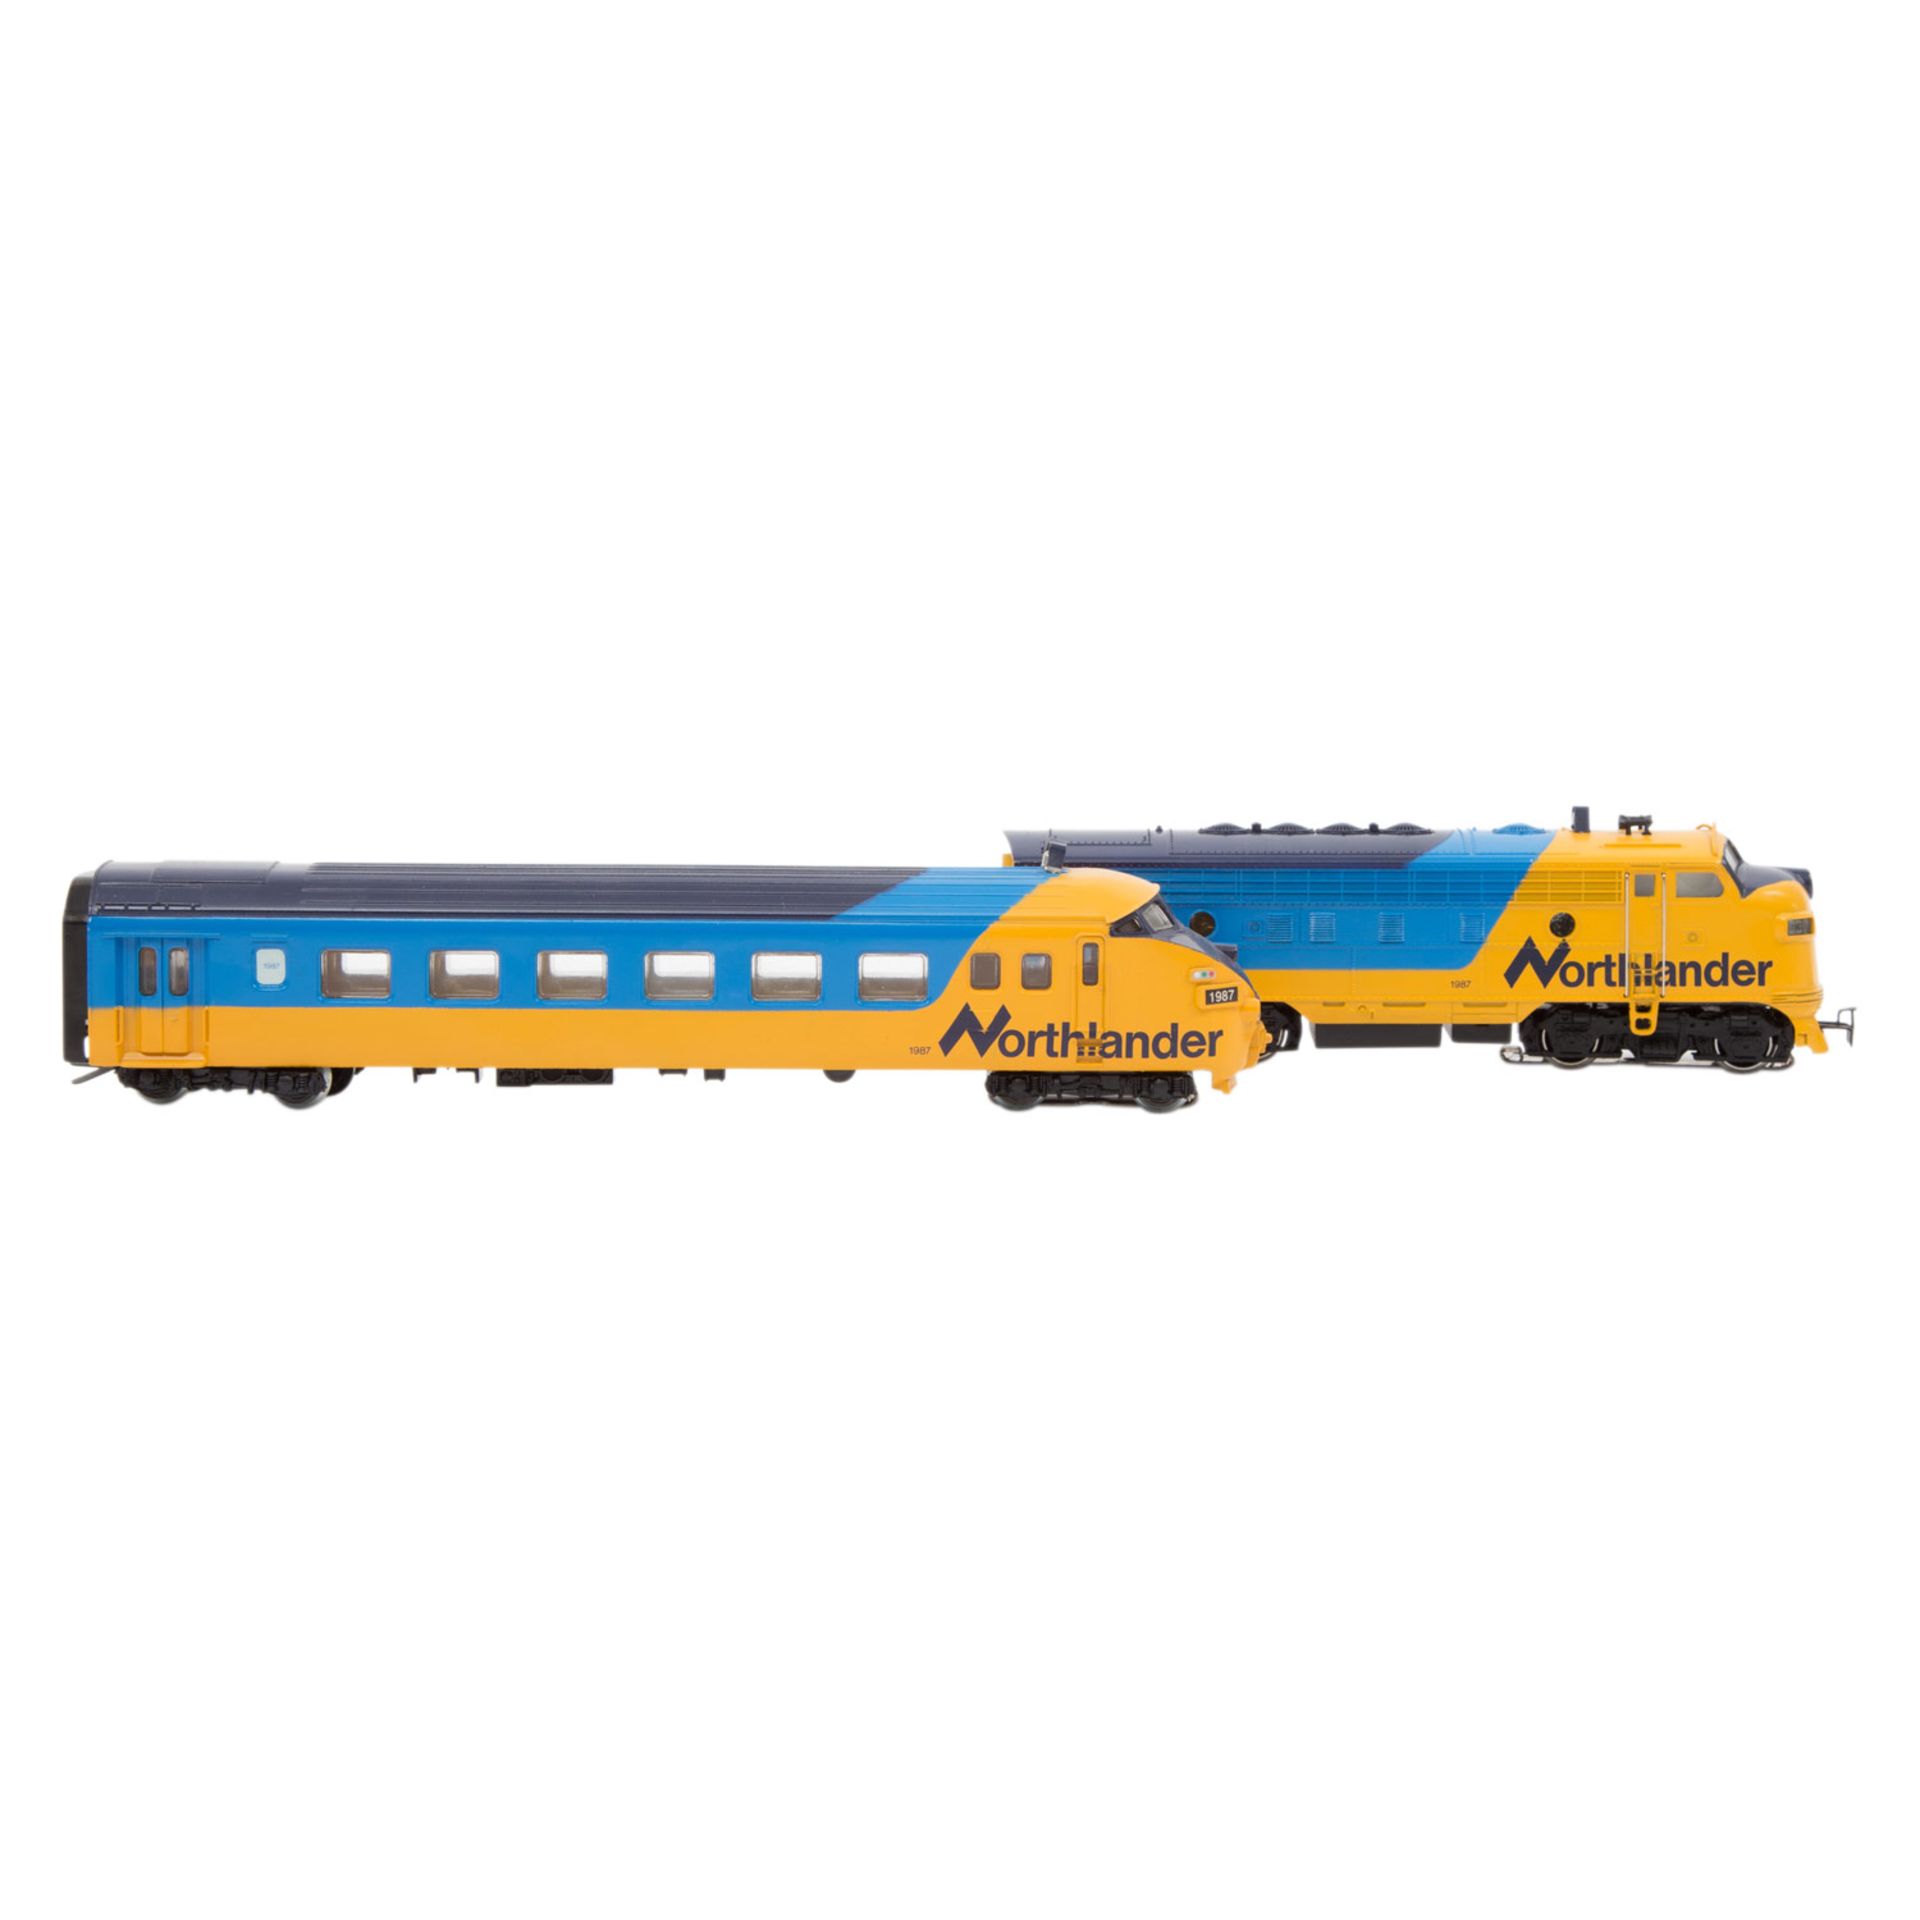 MÄRKLIN Triebwagenzug "Northlander", Spur H0, Guss- bzw. Kunststoff-Gehäuse, blau/gelb, 4-teilig, - Bild 2 aus 5